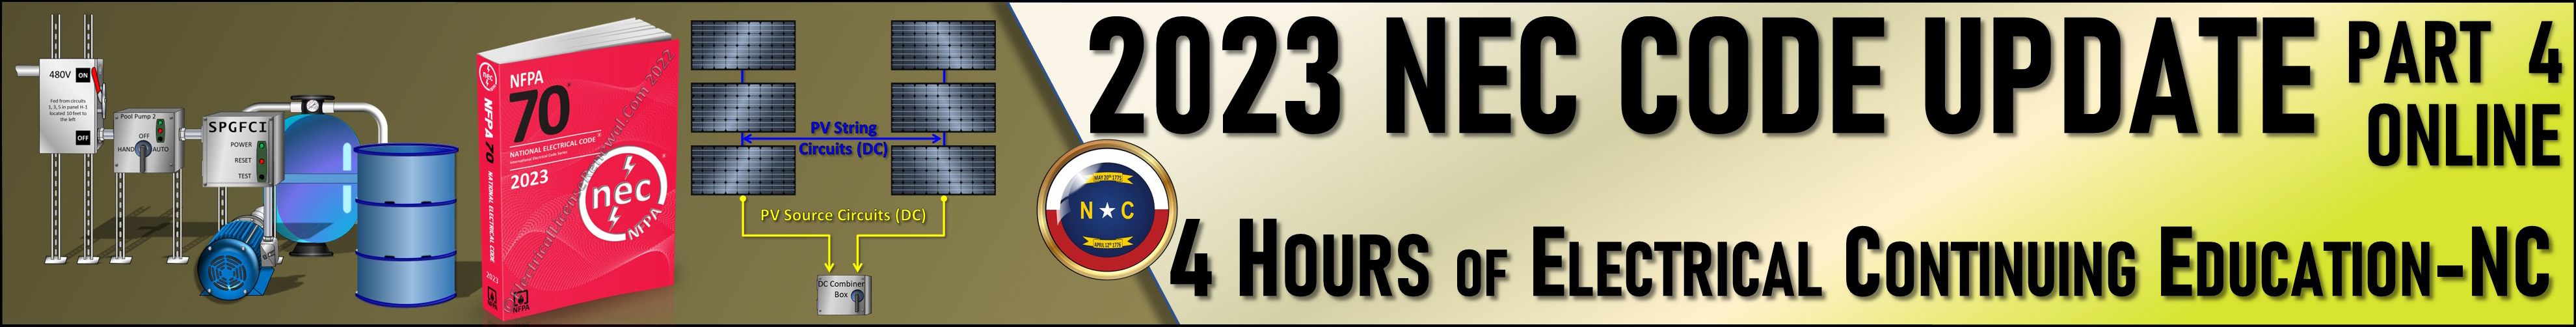 2023 NEC Code Changes Update Part 4 Banner